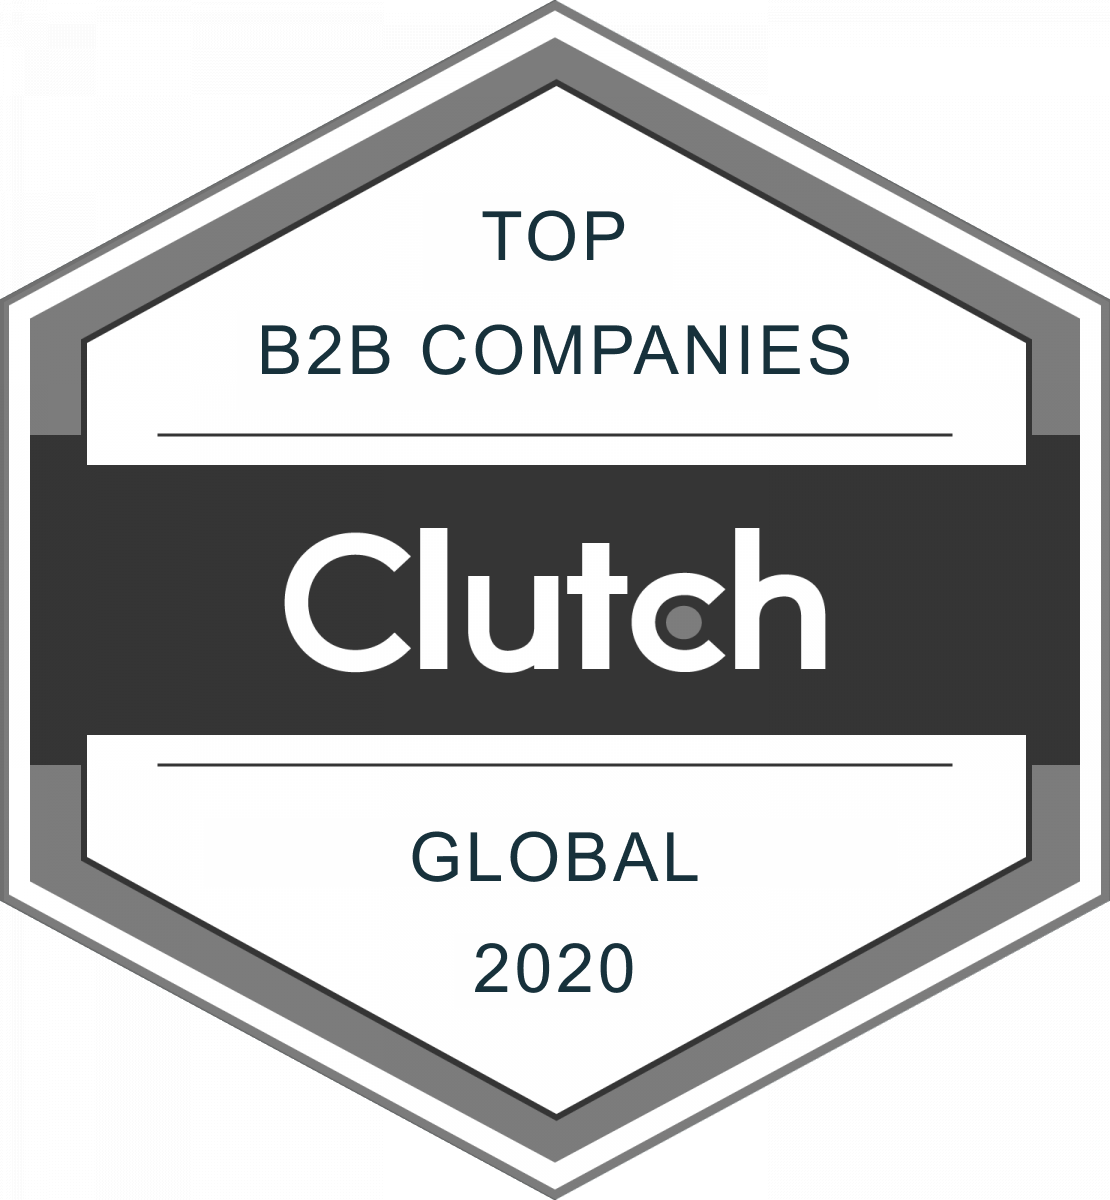 Top B2B Compnaies Global - Clutch